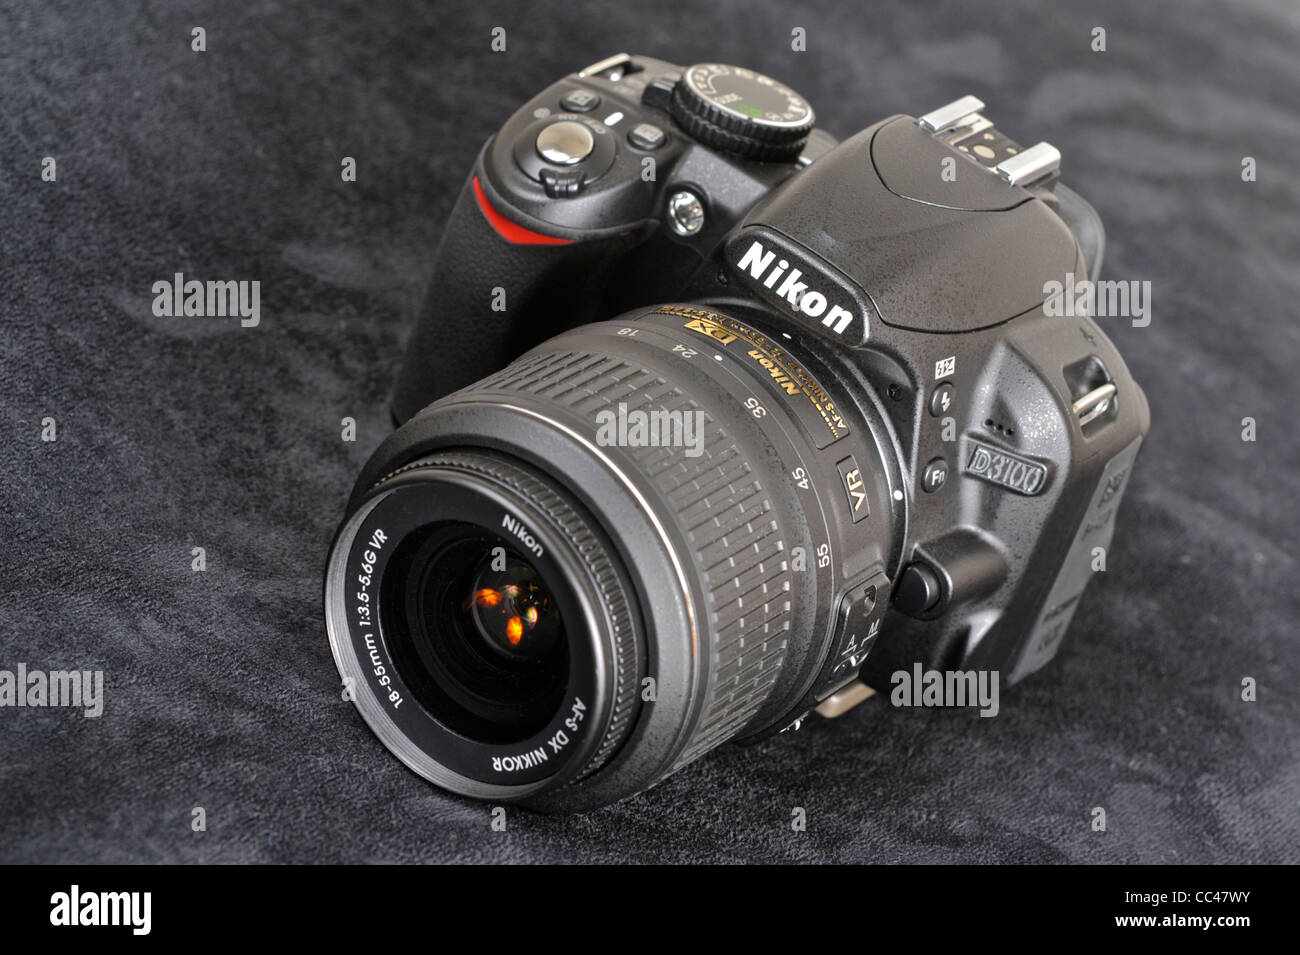 Nikon d3100 fotografías e imágenes de alta resolución - Alamy